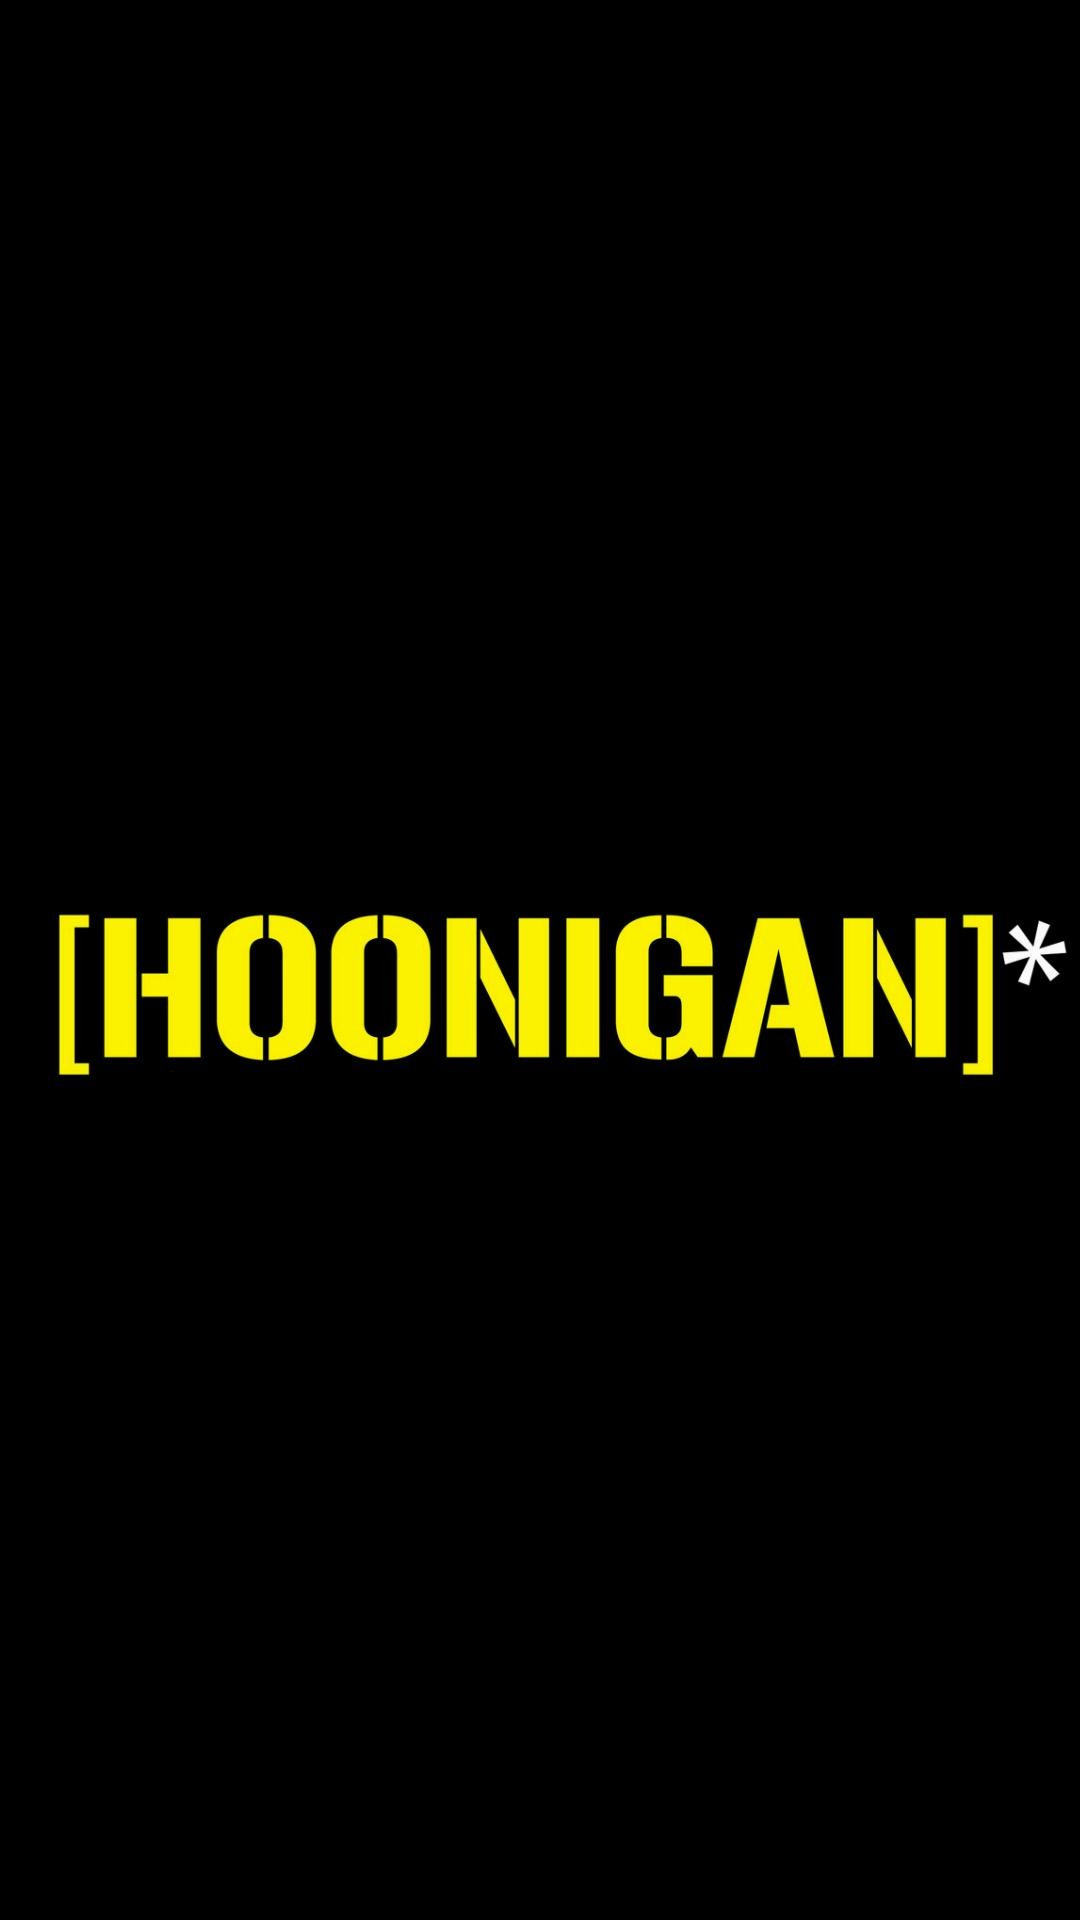 hoonigan iphone wallpaper,text,black,font,yellow,logo